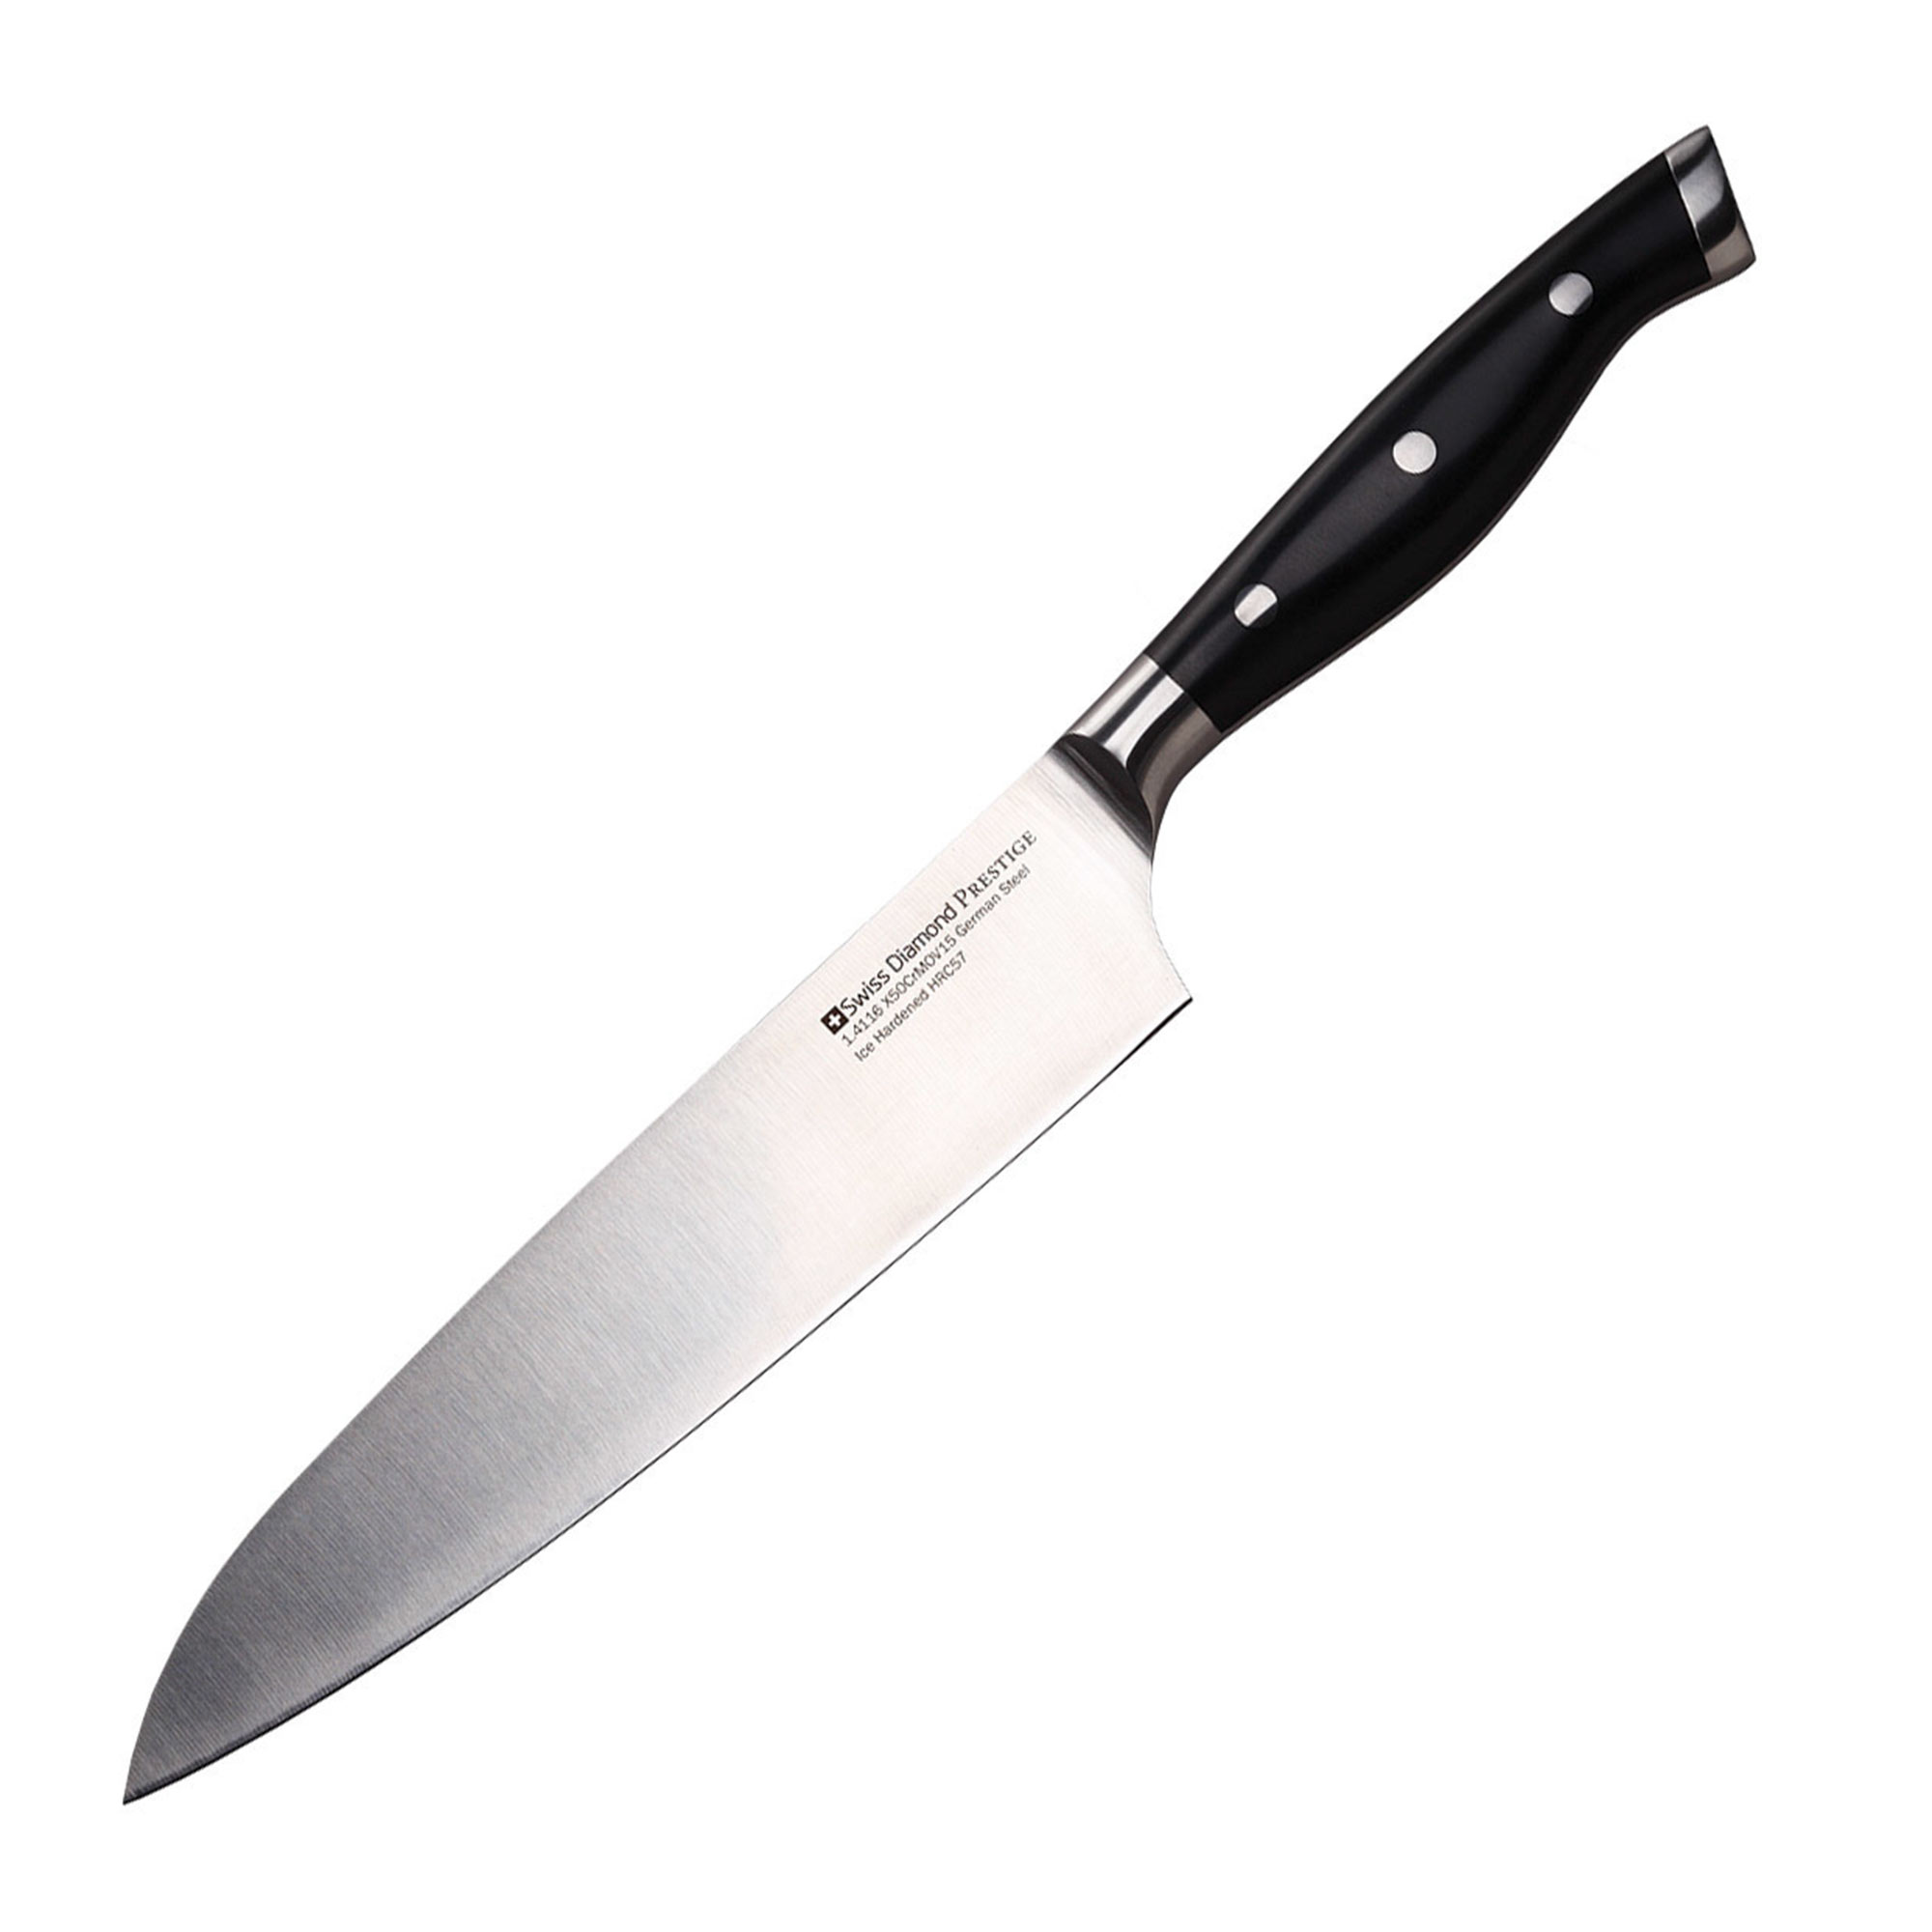 Кухонный нож для шефа  Swiss diamond 20 см, цвет серебряный - фото 1